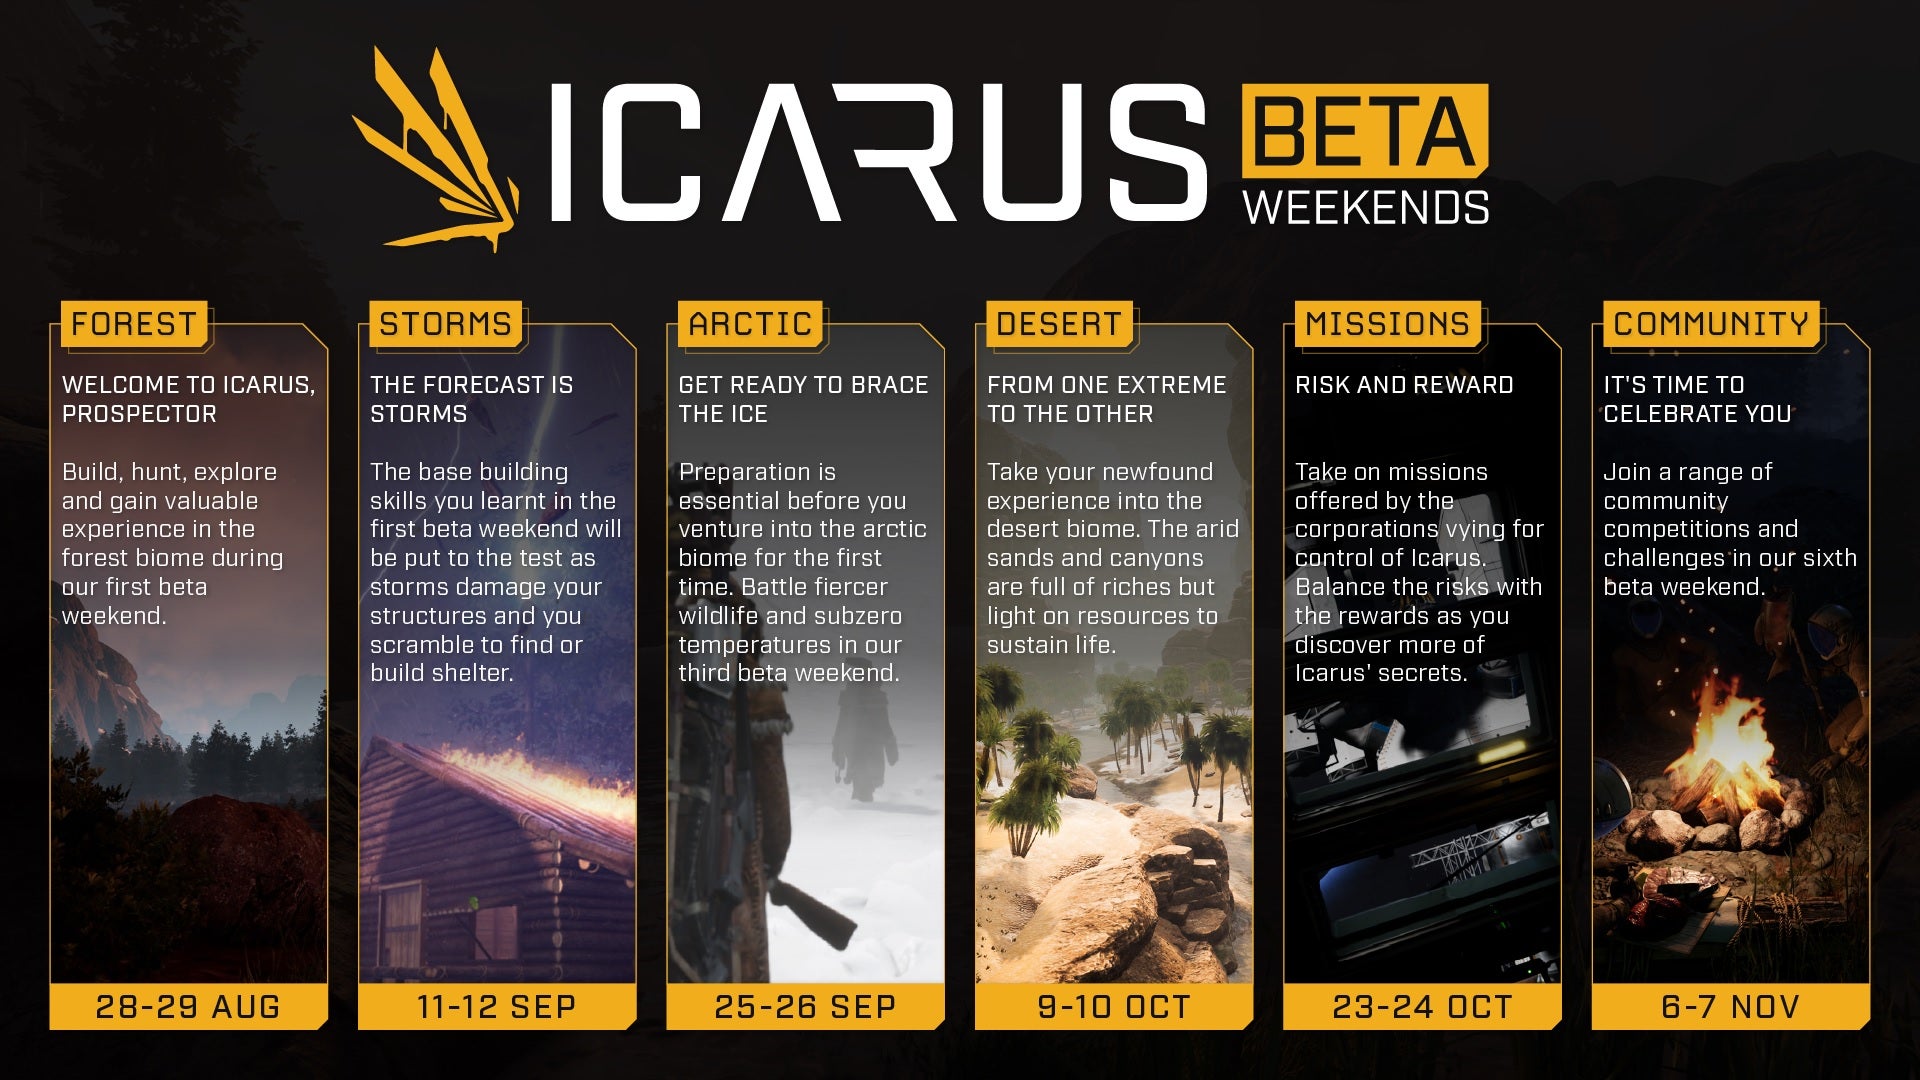 Icarus beta weekends schedule: